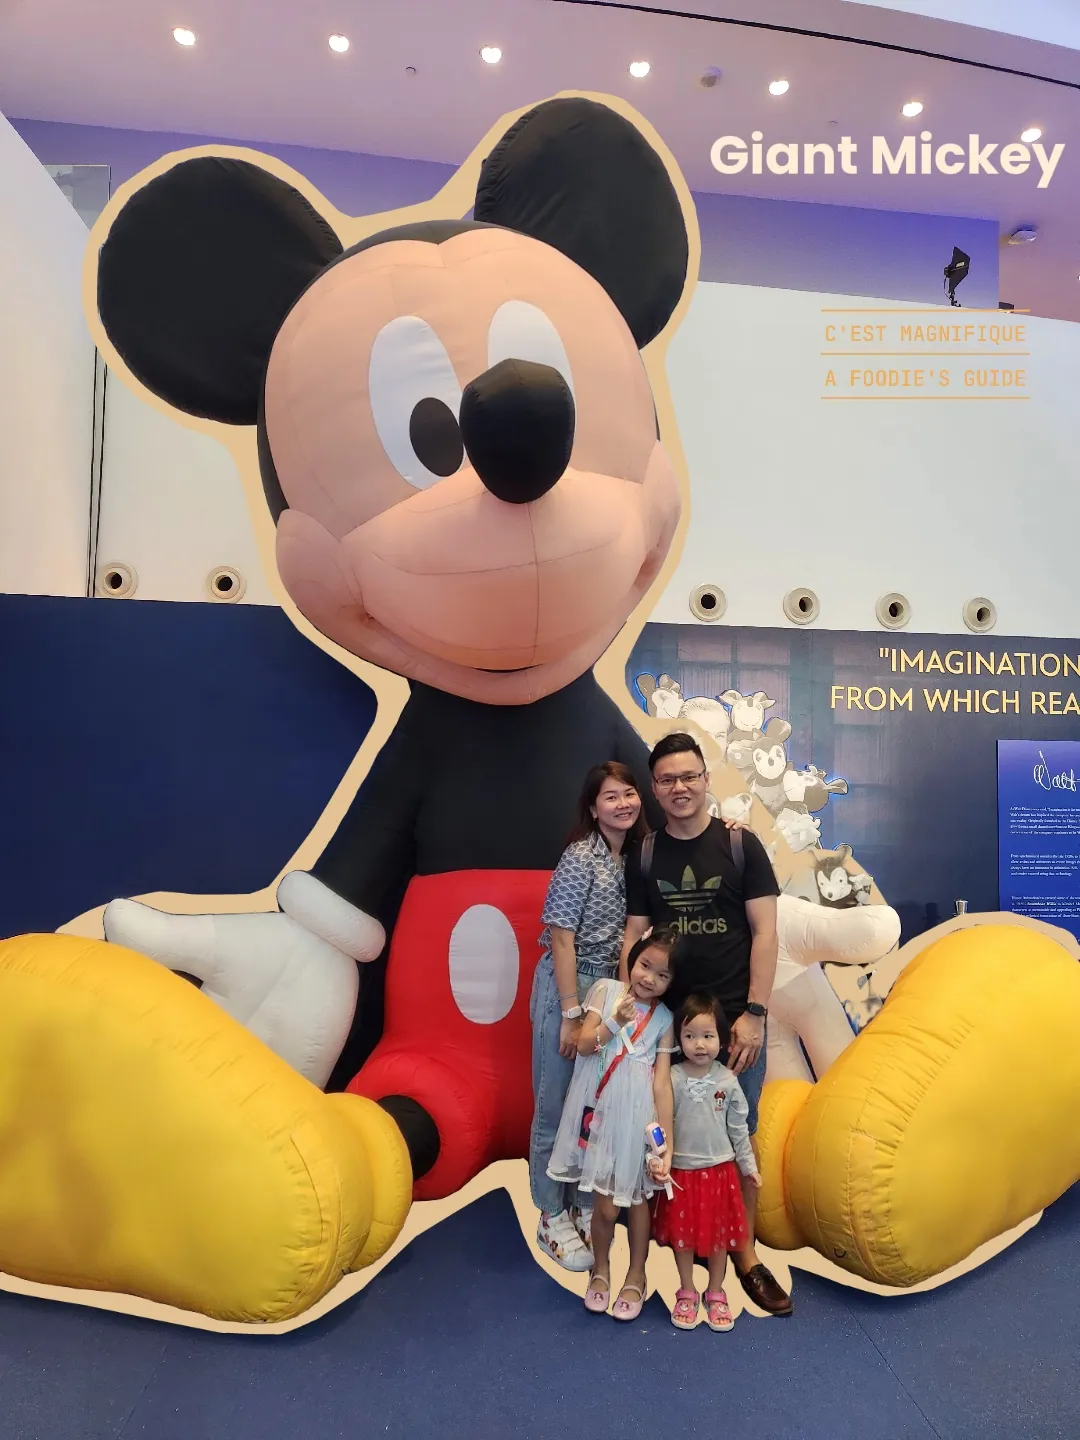 Mickey Mouse Peluche 35 Cm Disney Phi Phi Toys